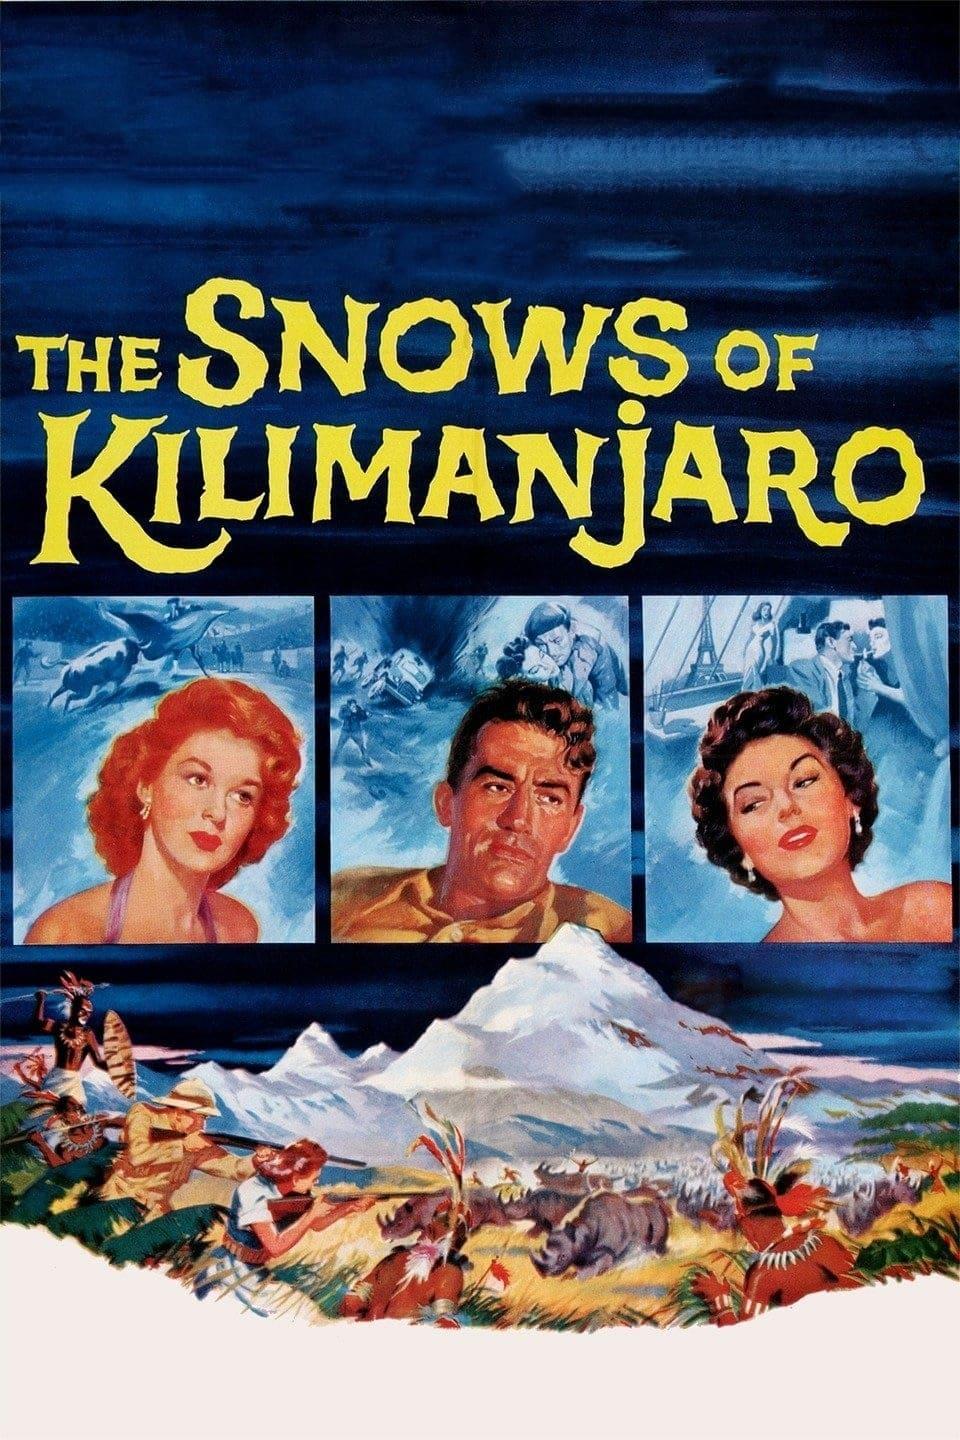 The Snows of Kilimanjaro poster